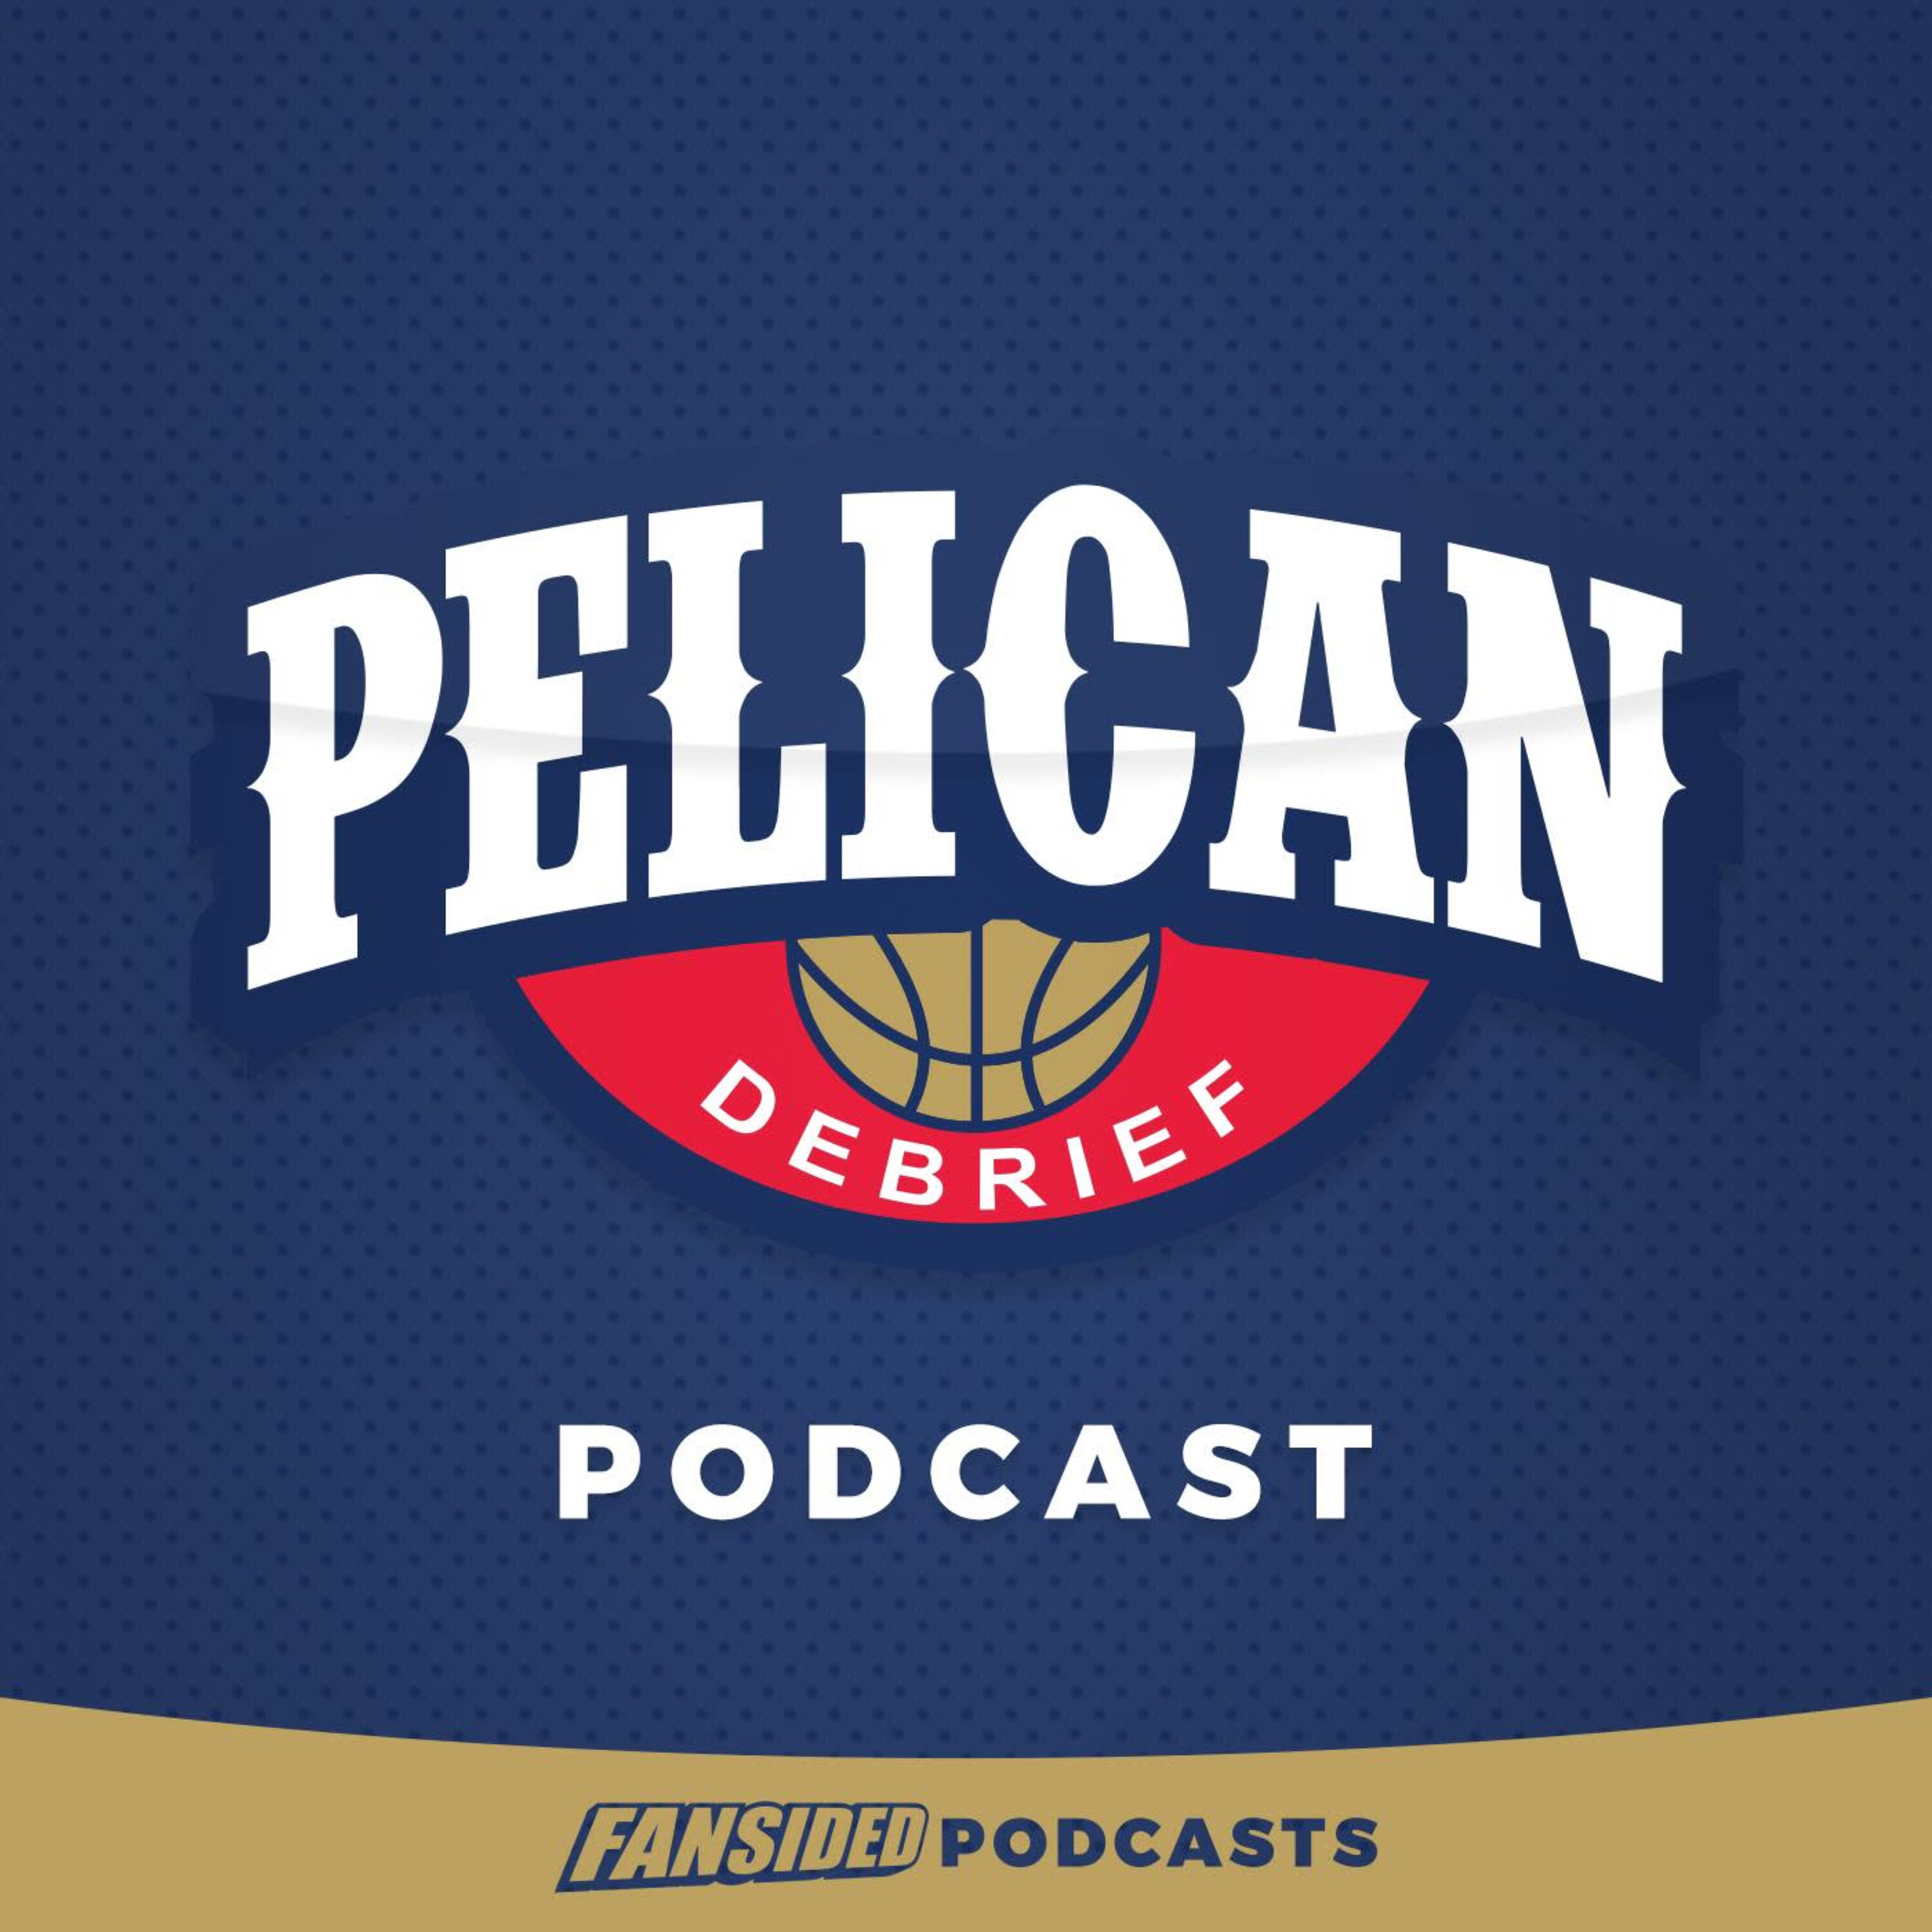 Pelican Debrief podcast